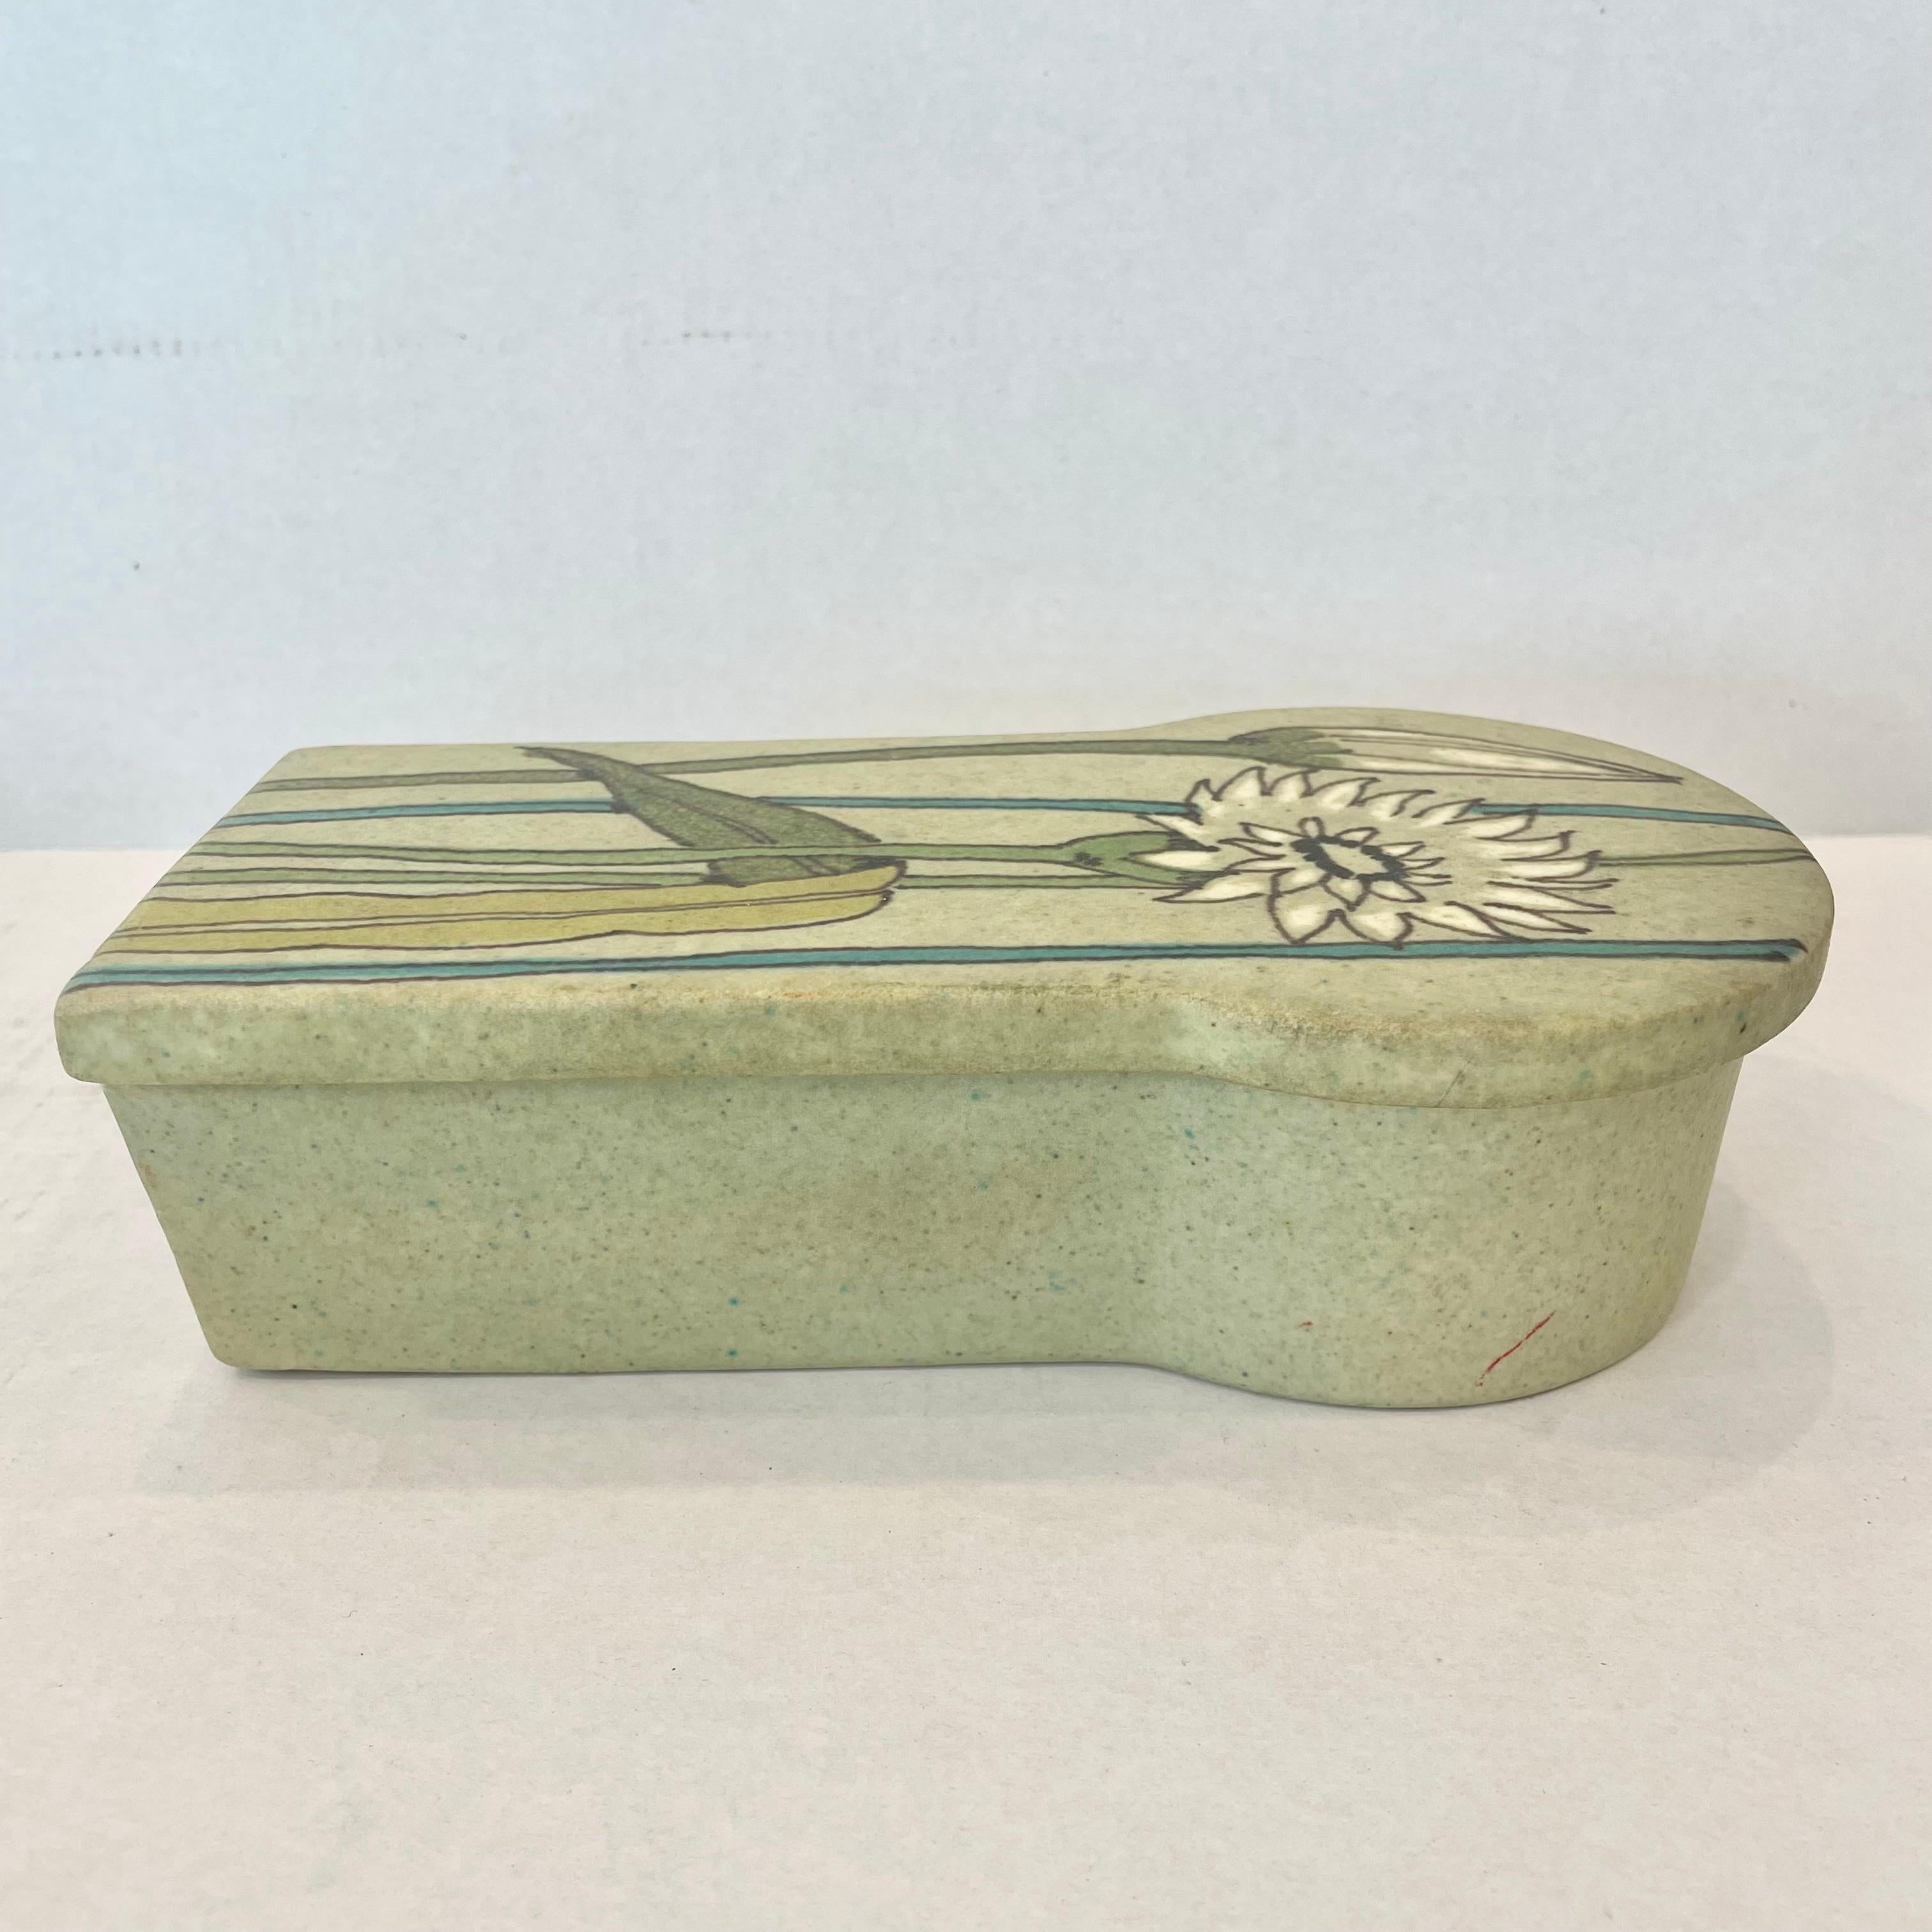 Italian Ceramic Stashbox and Ashtray by Raymor, 1960s Italy  For Sale